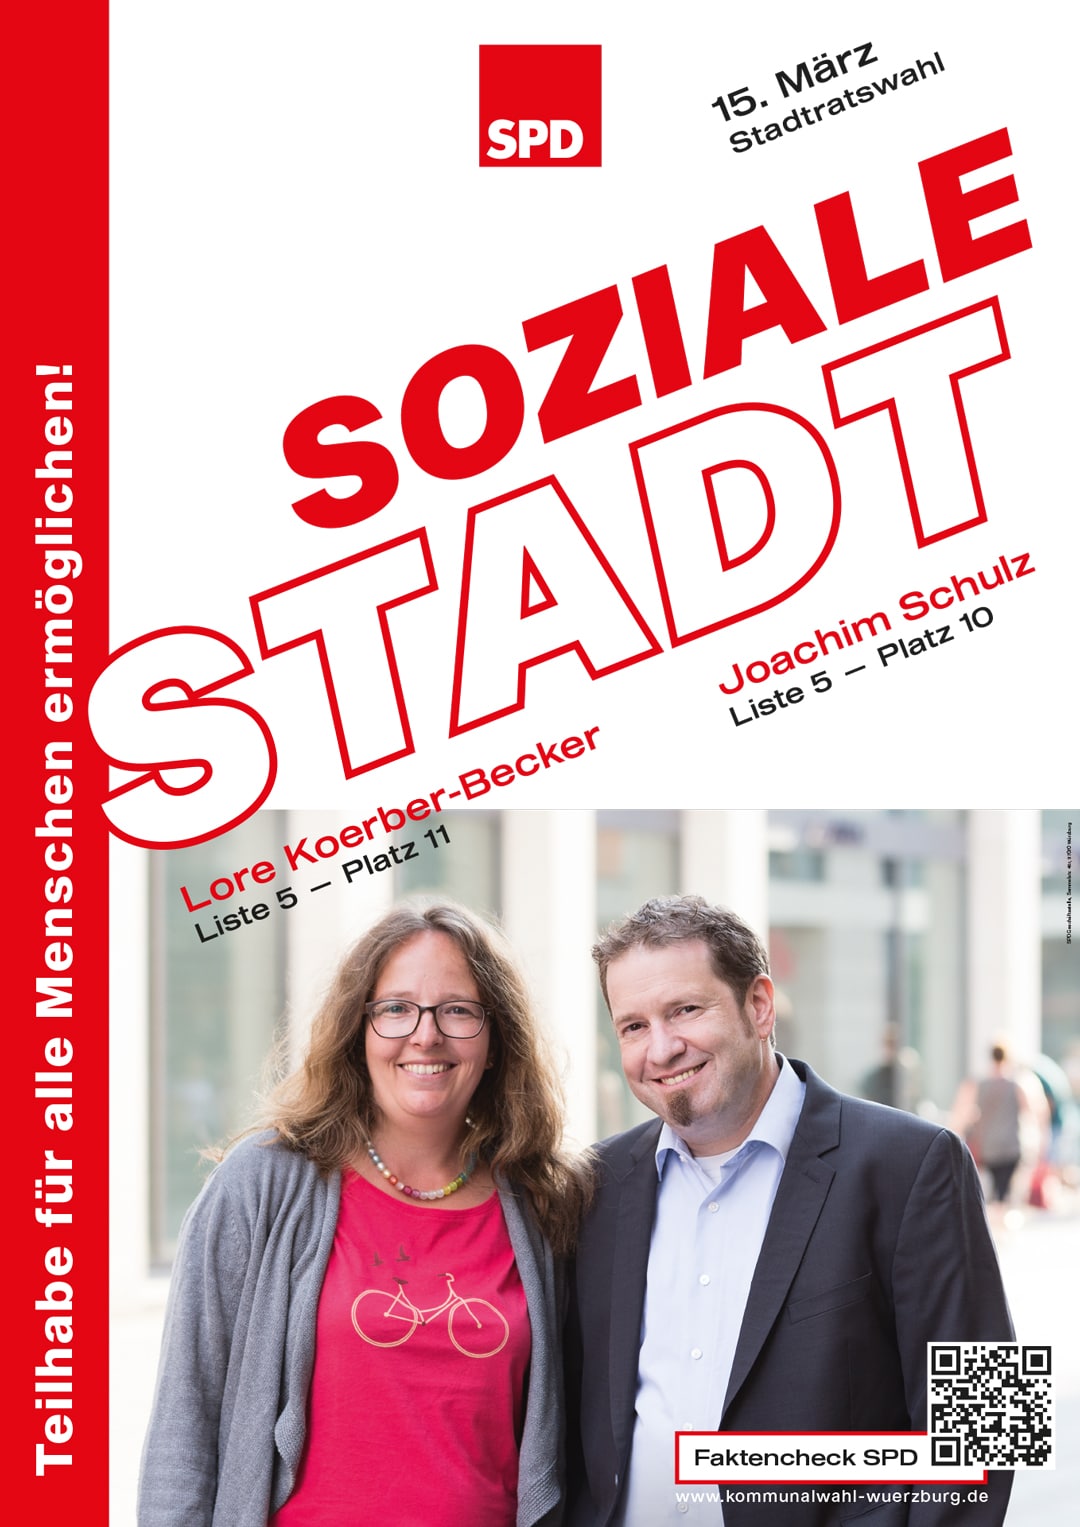 SPD Würzburg Kommunalwahl-Kampagne Design Wahlplakat Soziale Stadt